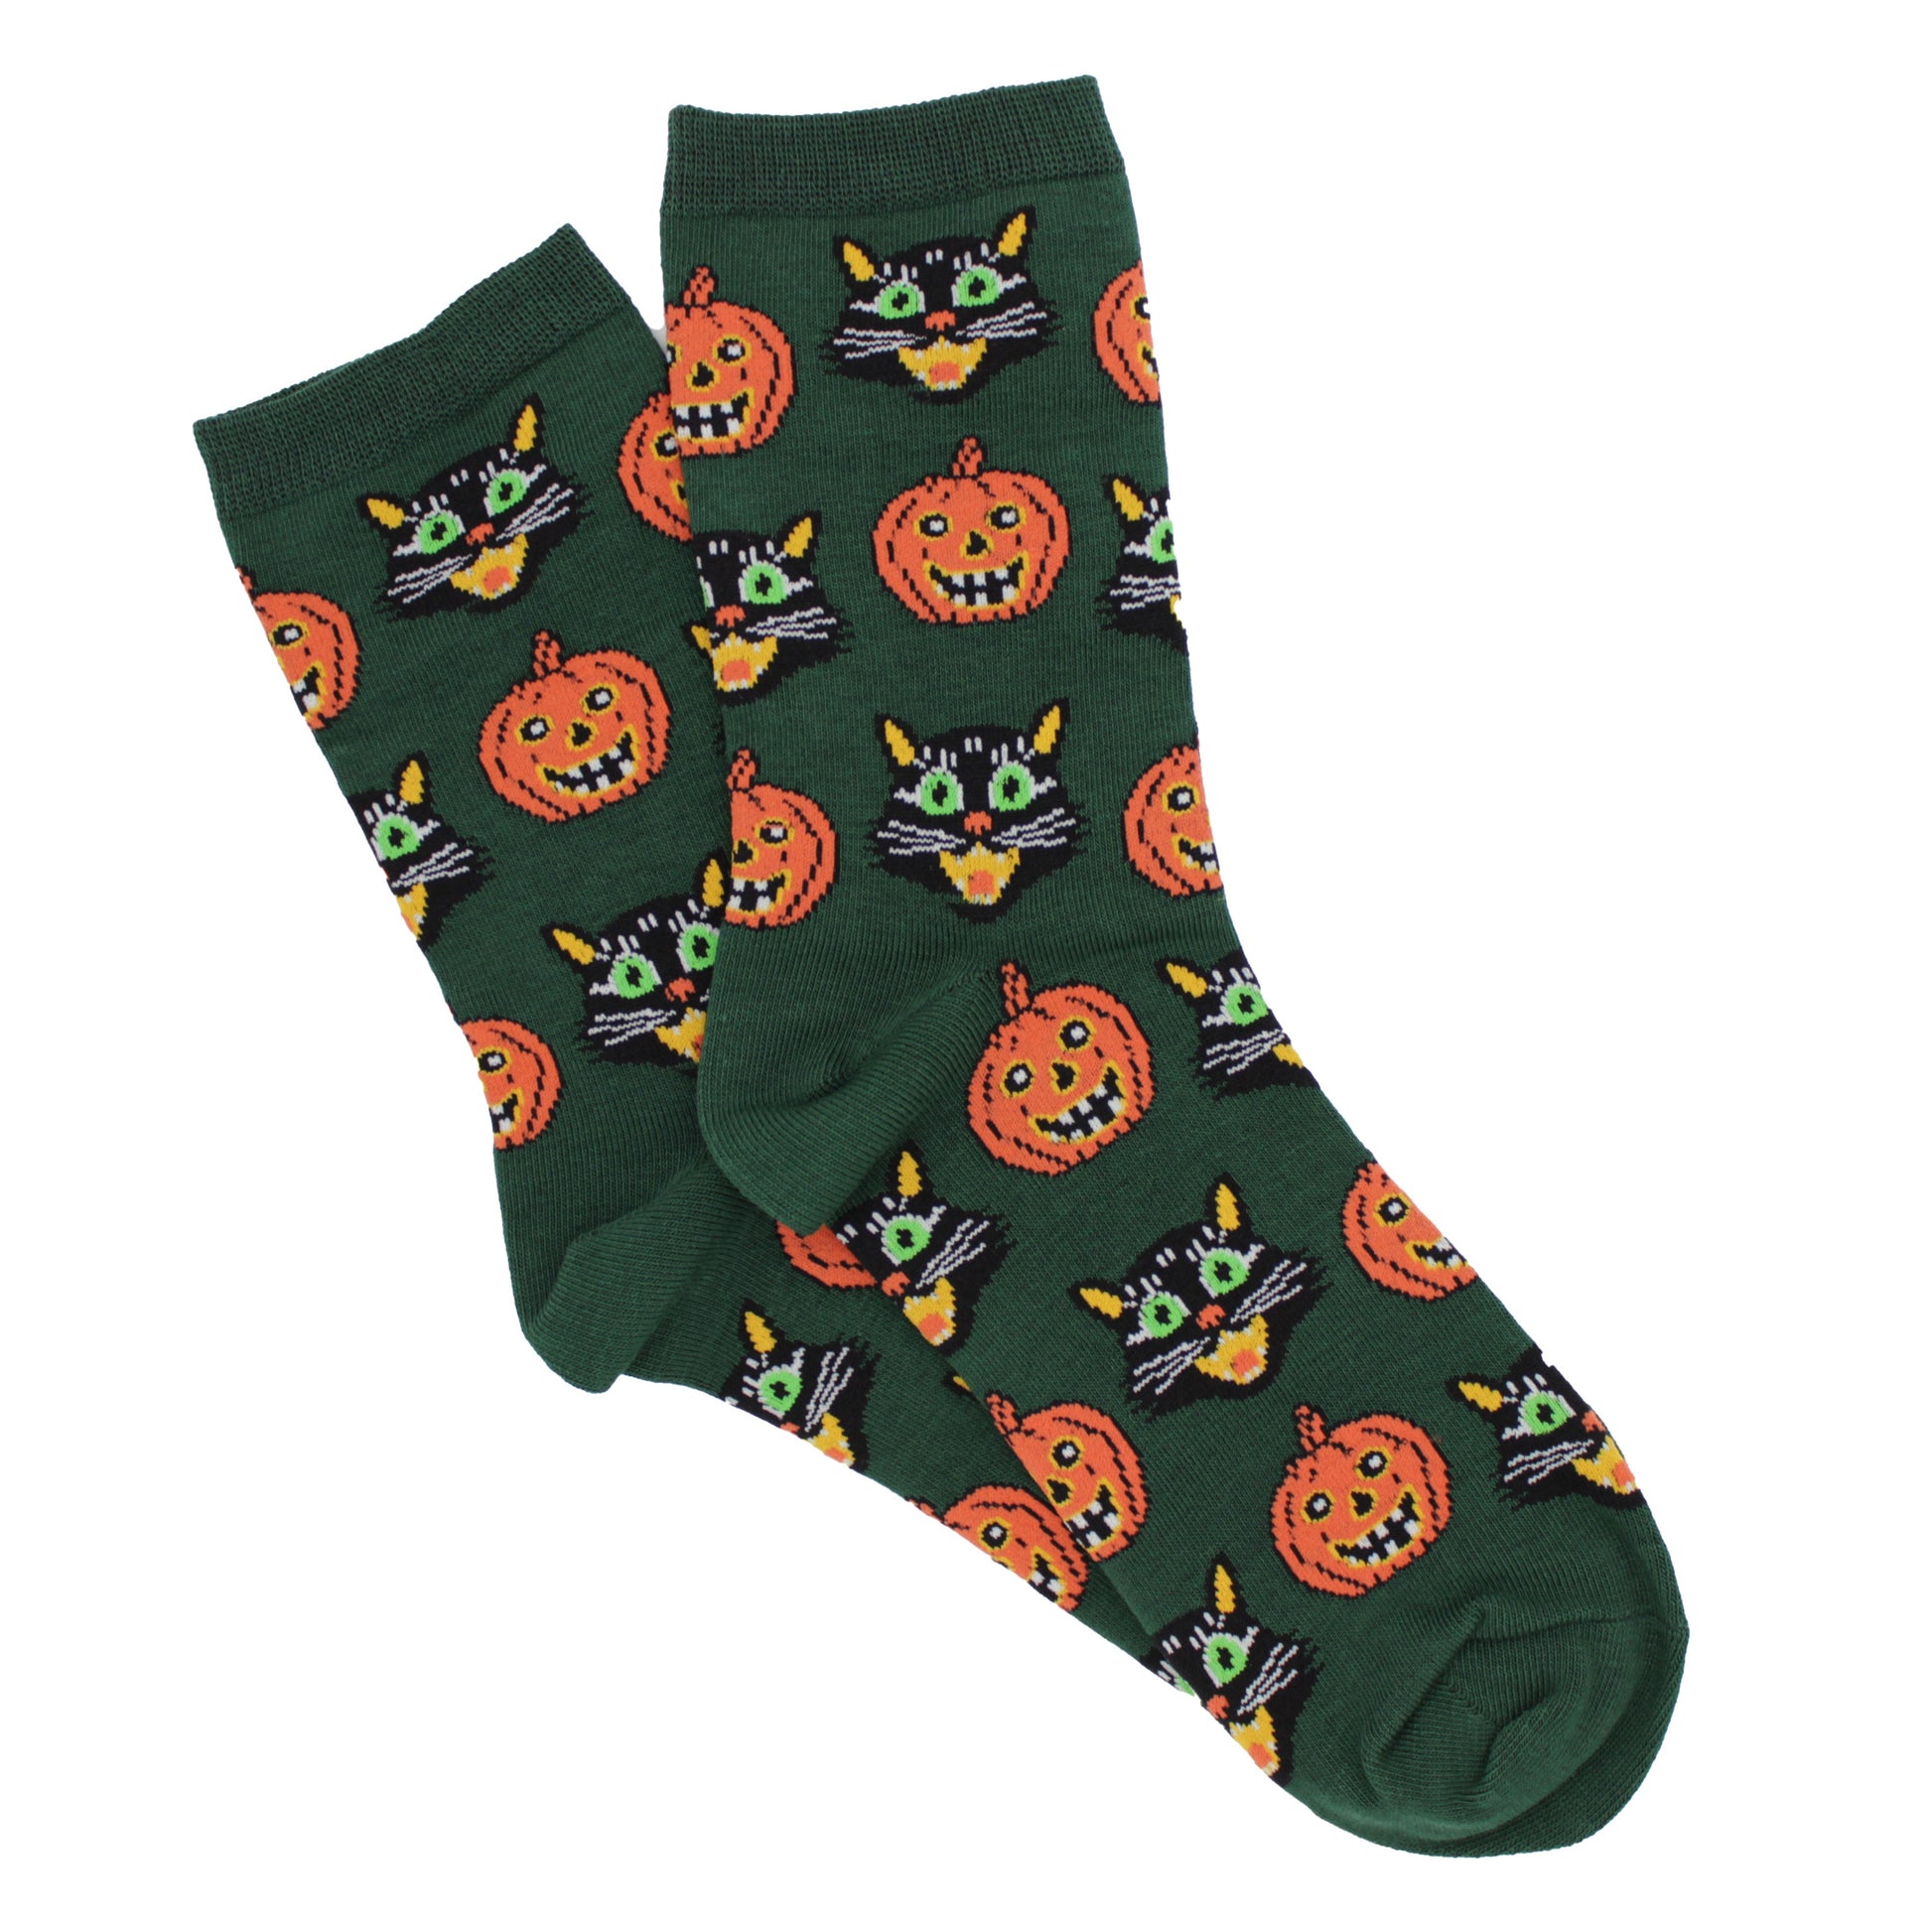 Unisex black cats and Jack O'Lantern Halloween socks